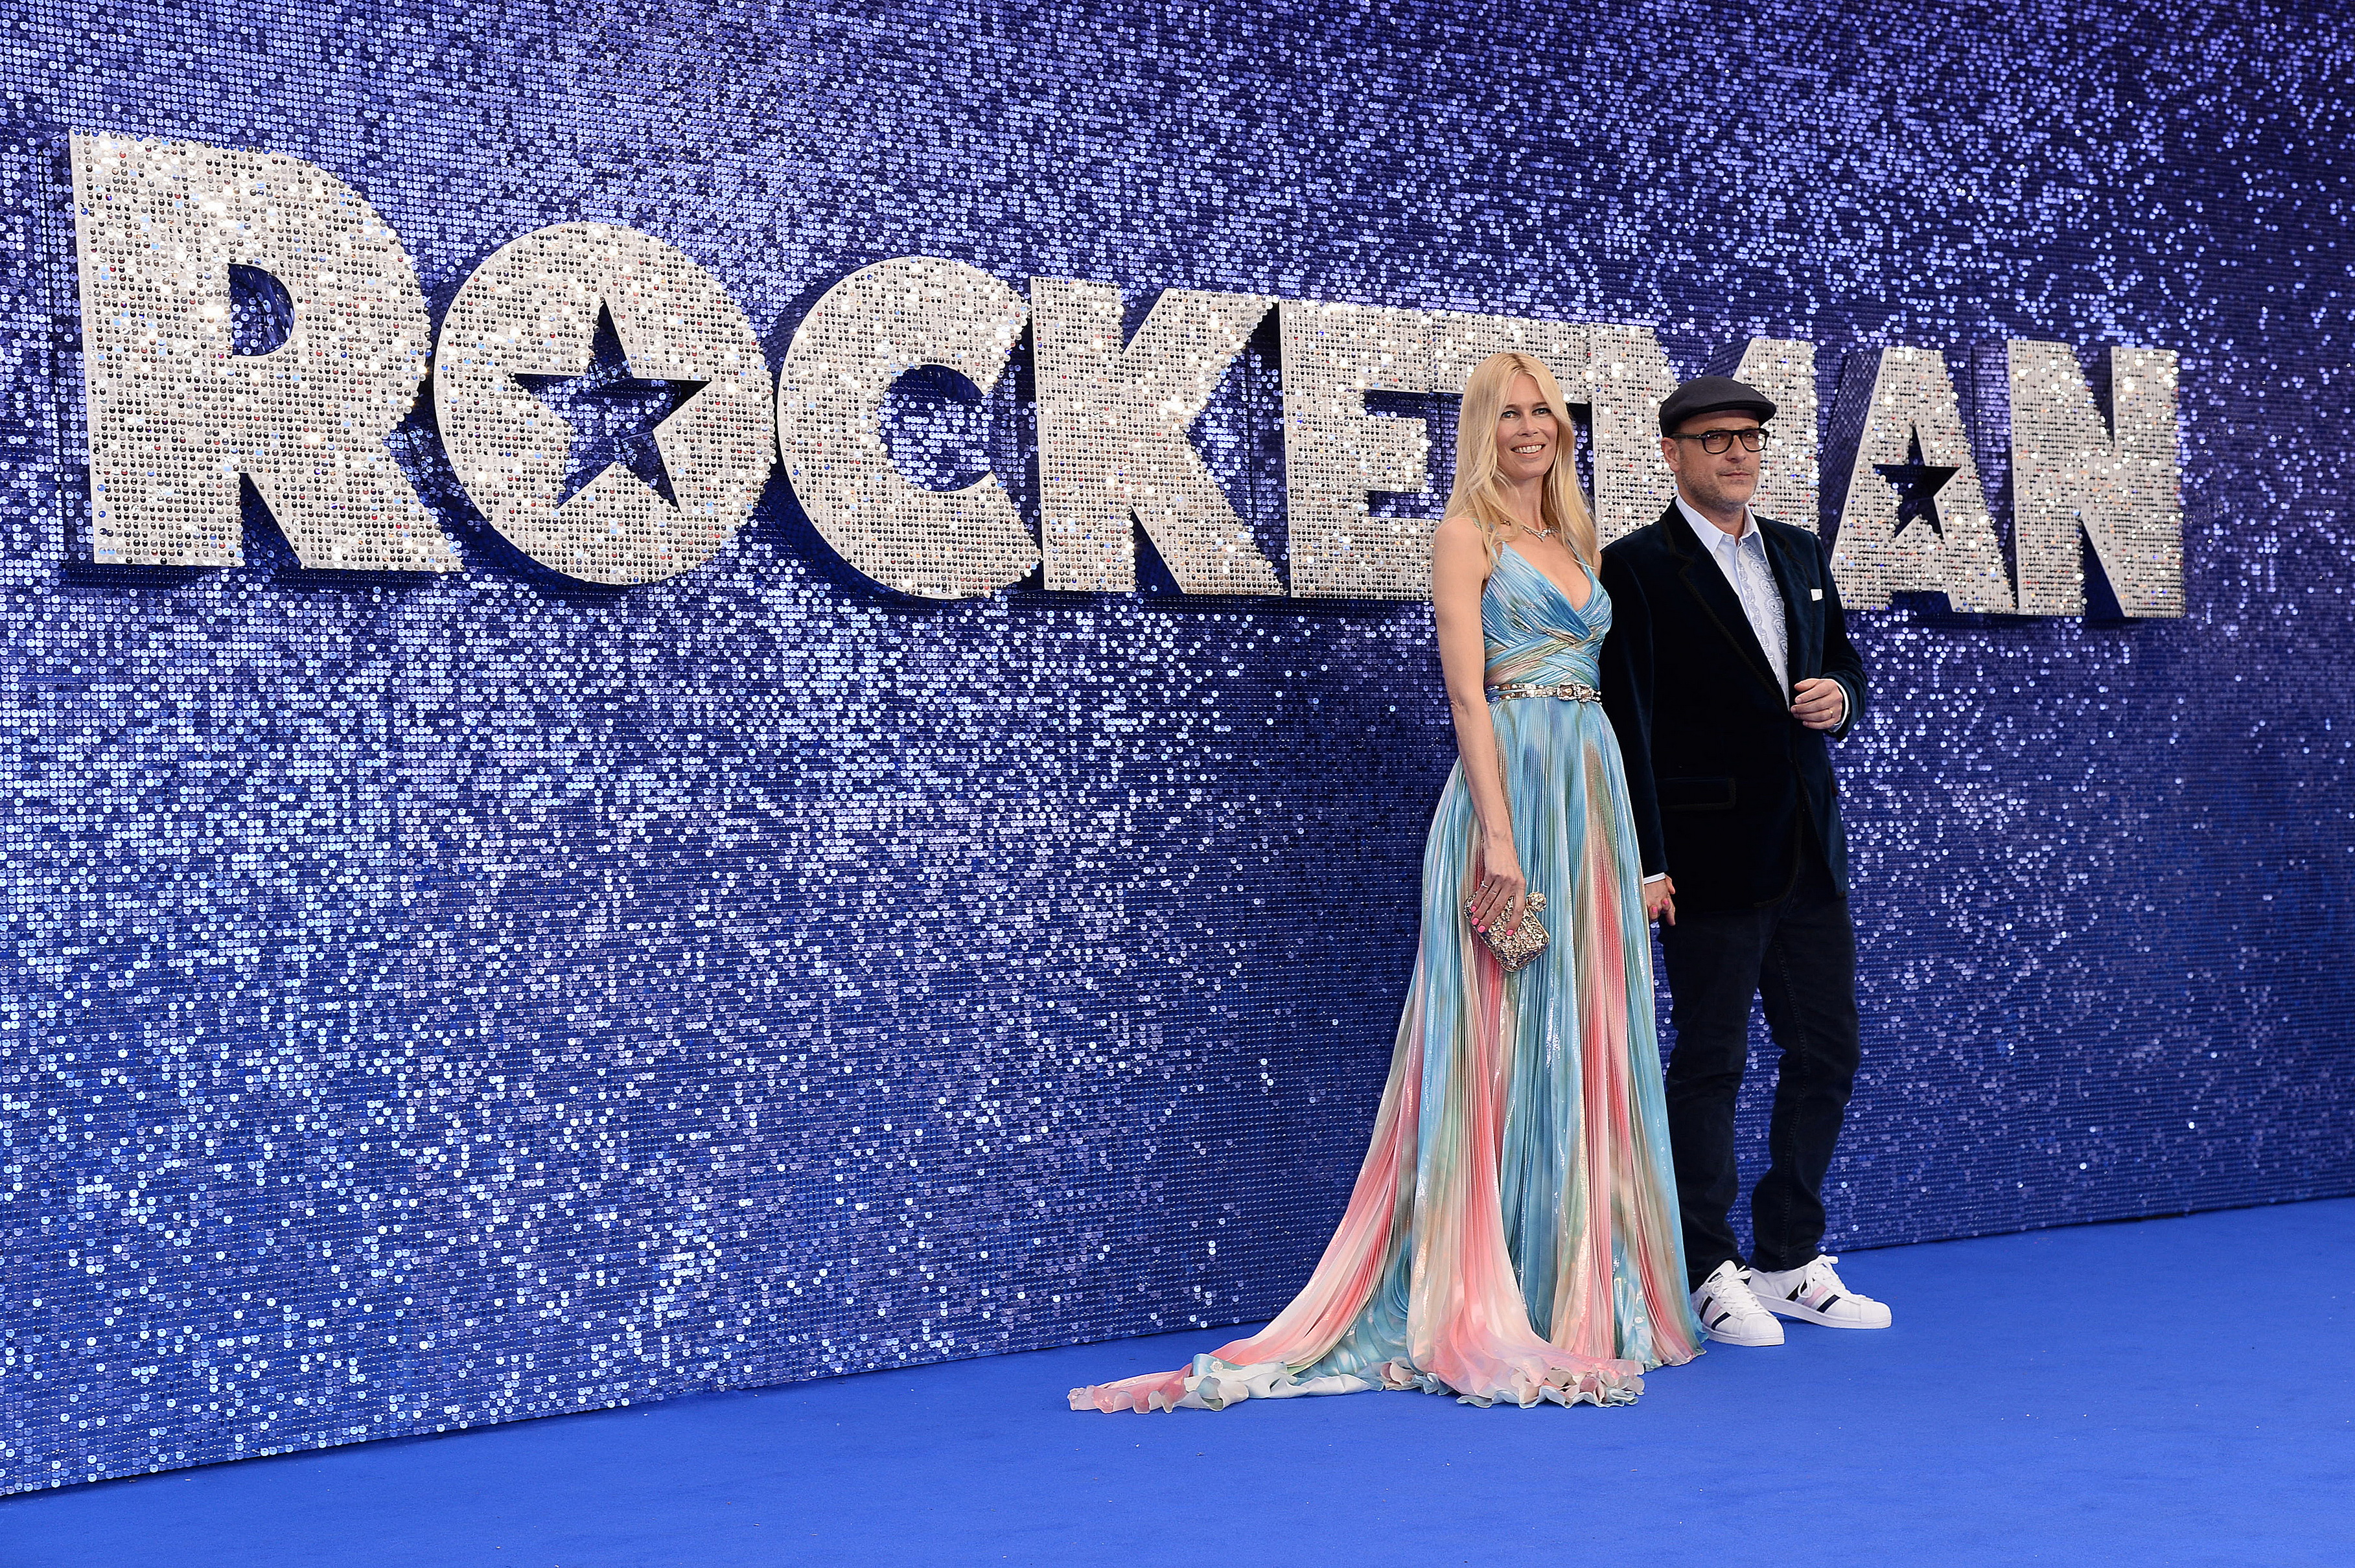 "Rocketman" UK Premiere - Red Carpet Arrivals